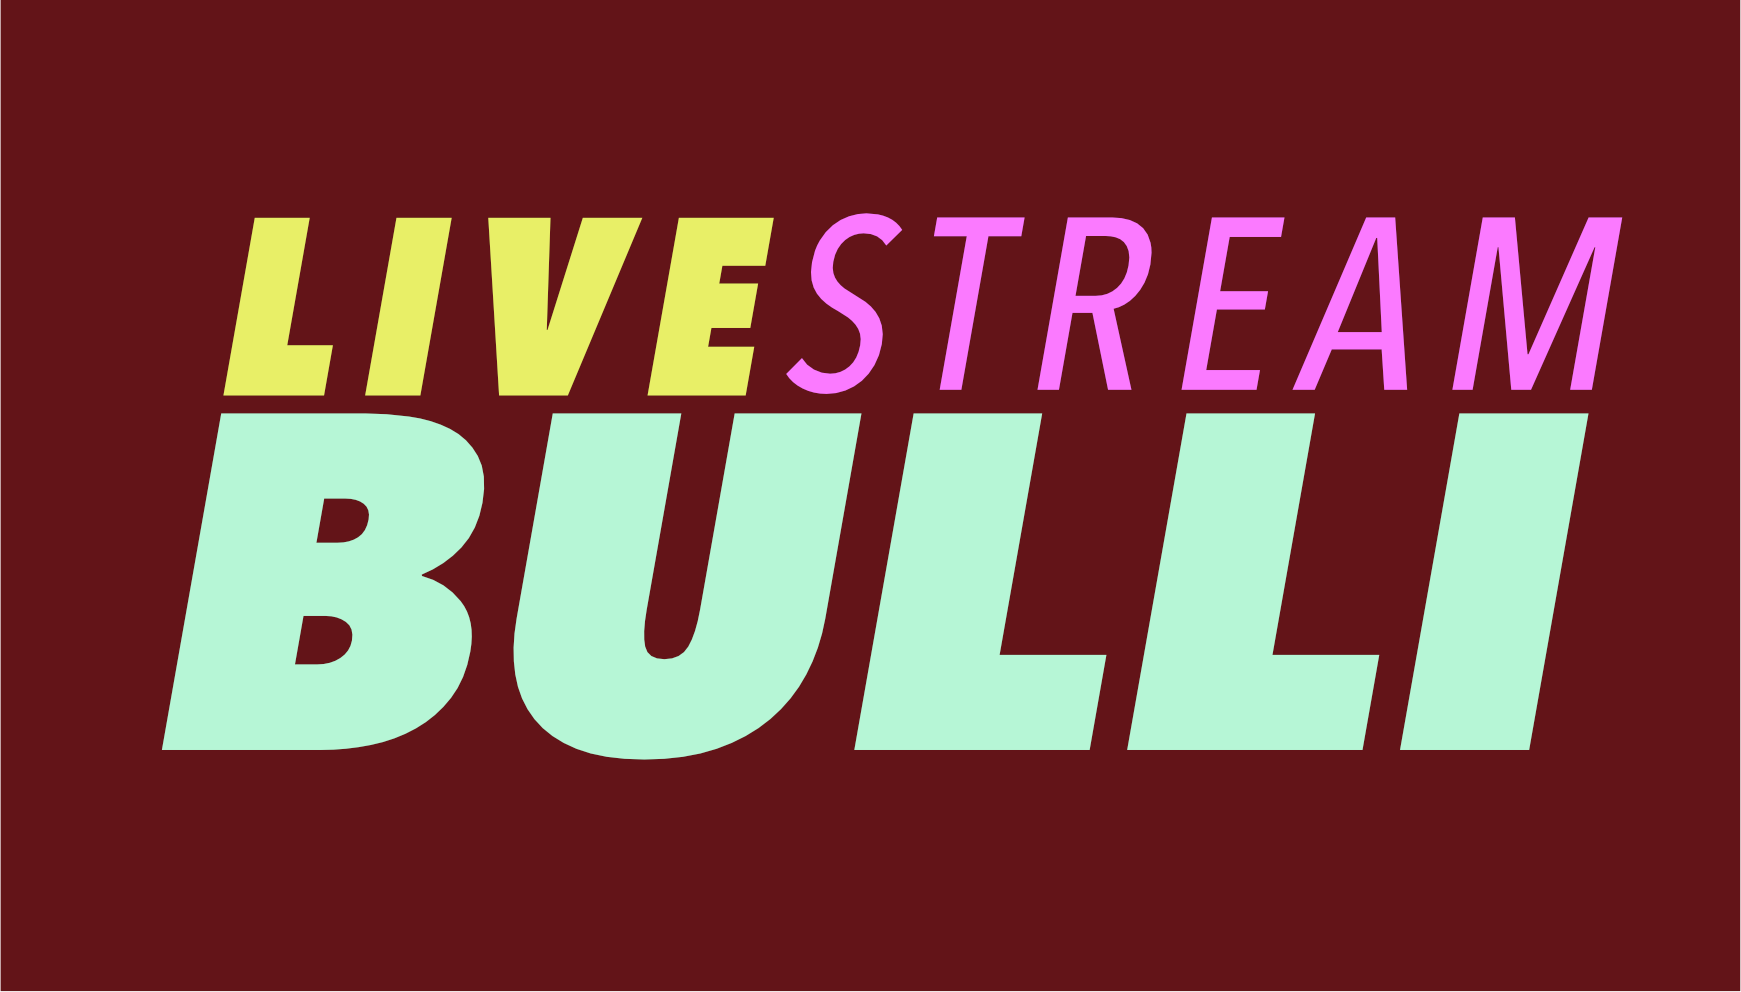 Das Logo des Live Stream Bulli